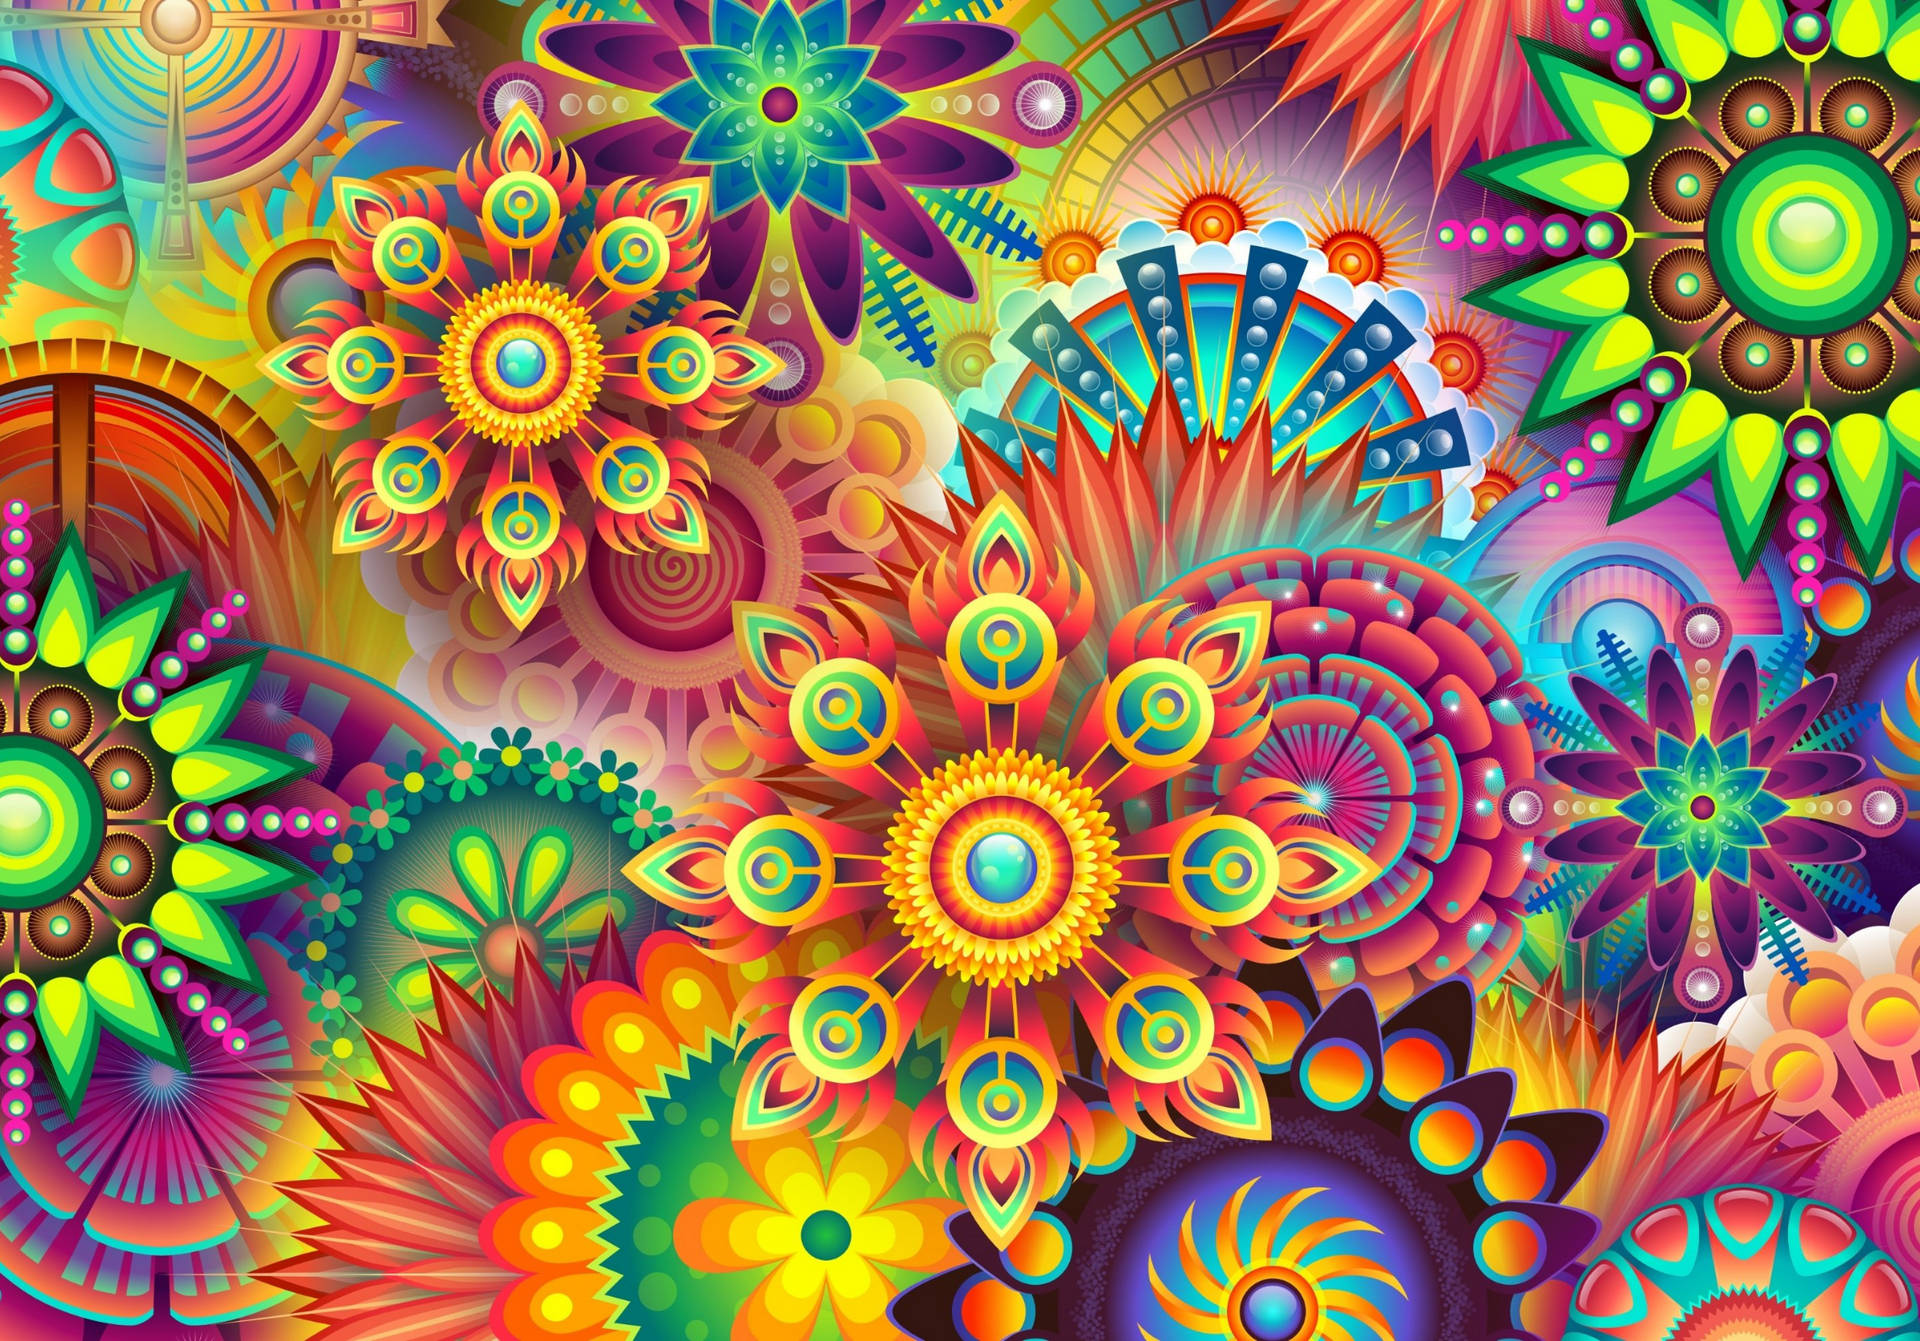 Ipad Pro 12.9 Psychedelic Flowers Wallpaper